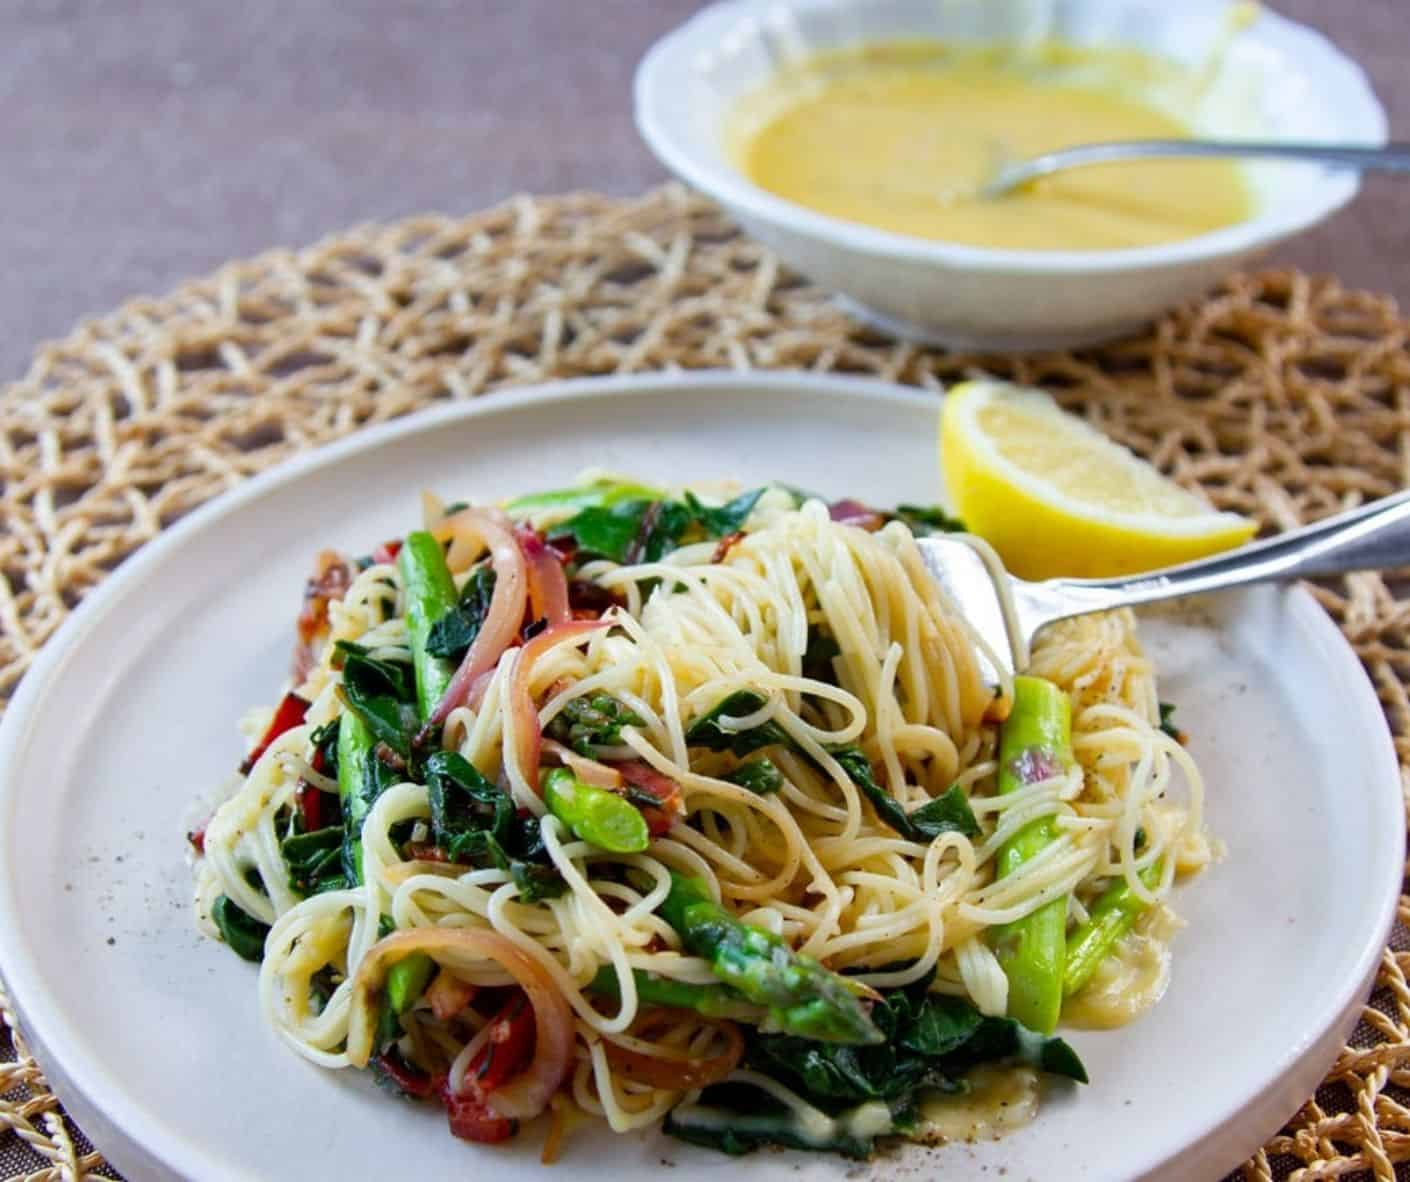 Asparagus Pasta With Lemon Garlic Butter Sauce